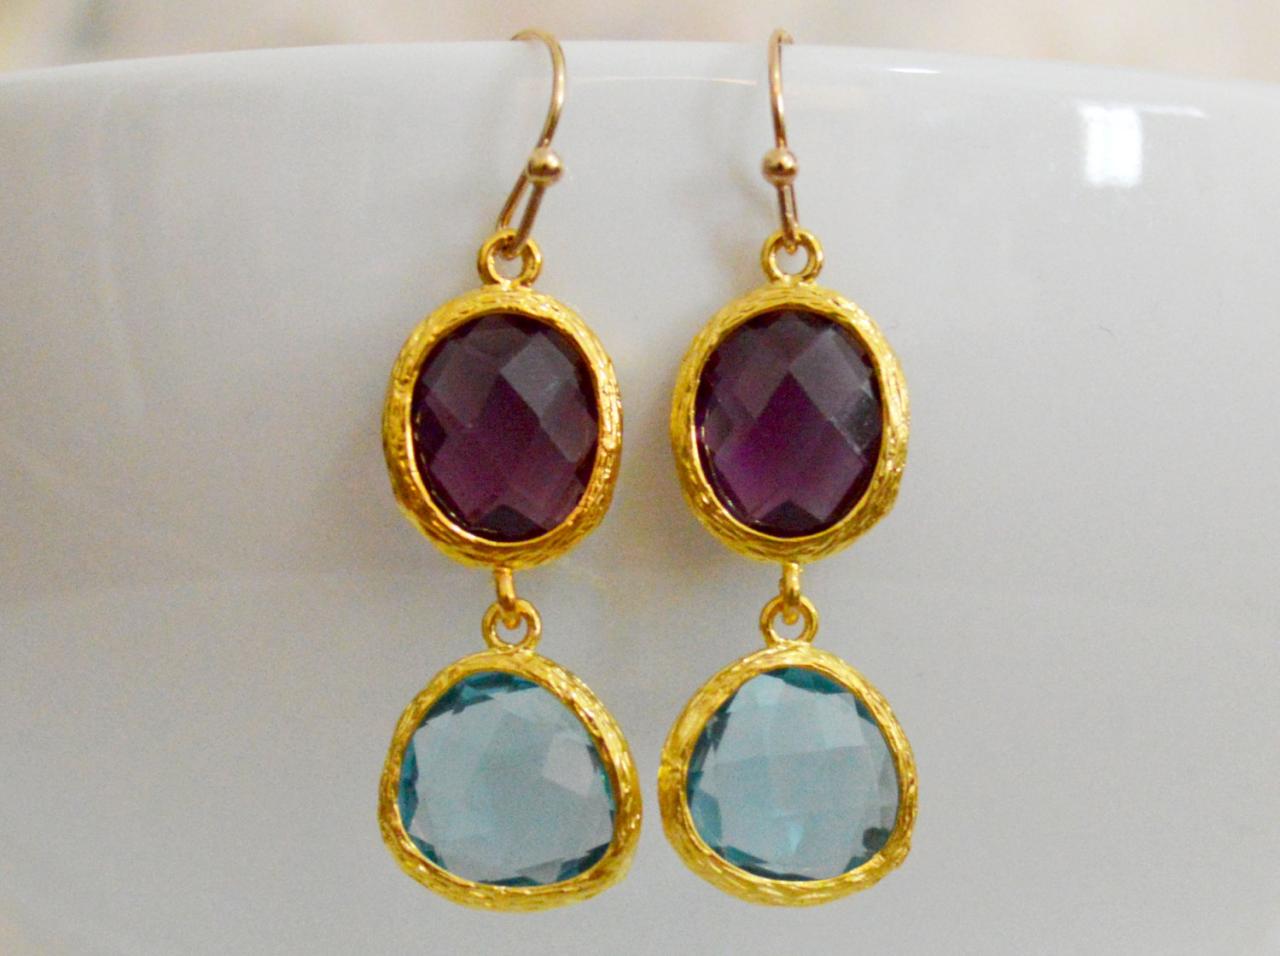 SALE) B-035 Glass earrings, Amethyst & aquamarine drop earrings, Dangle earrings, Gold plated earrings/Bridesmaid gifts/Everyday jewelry/